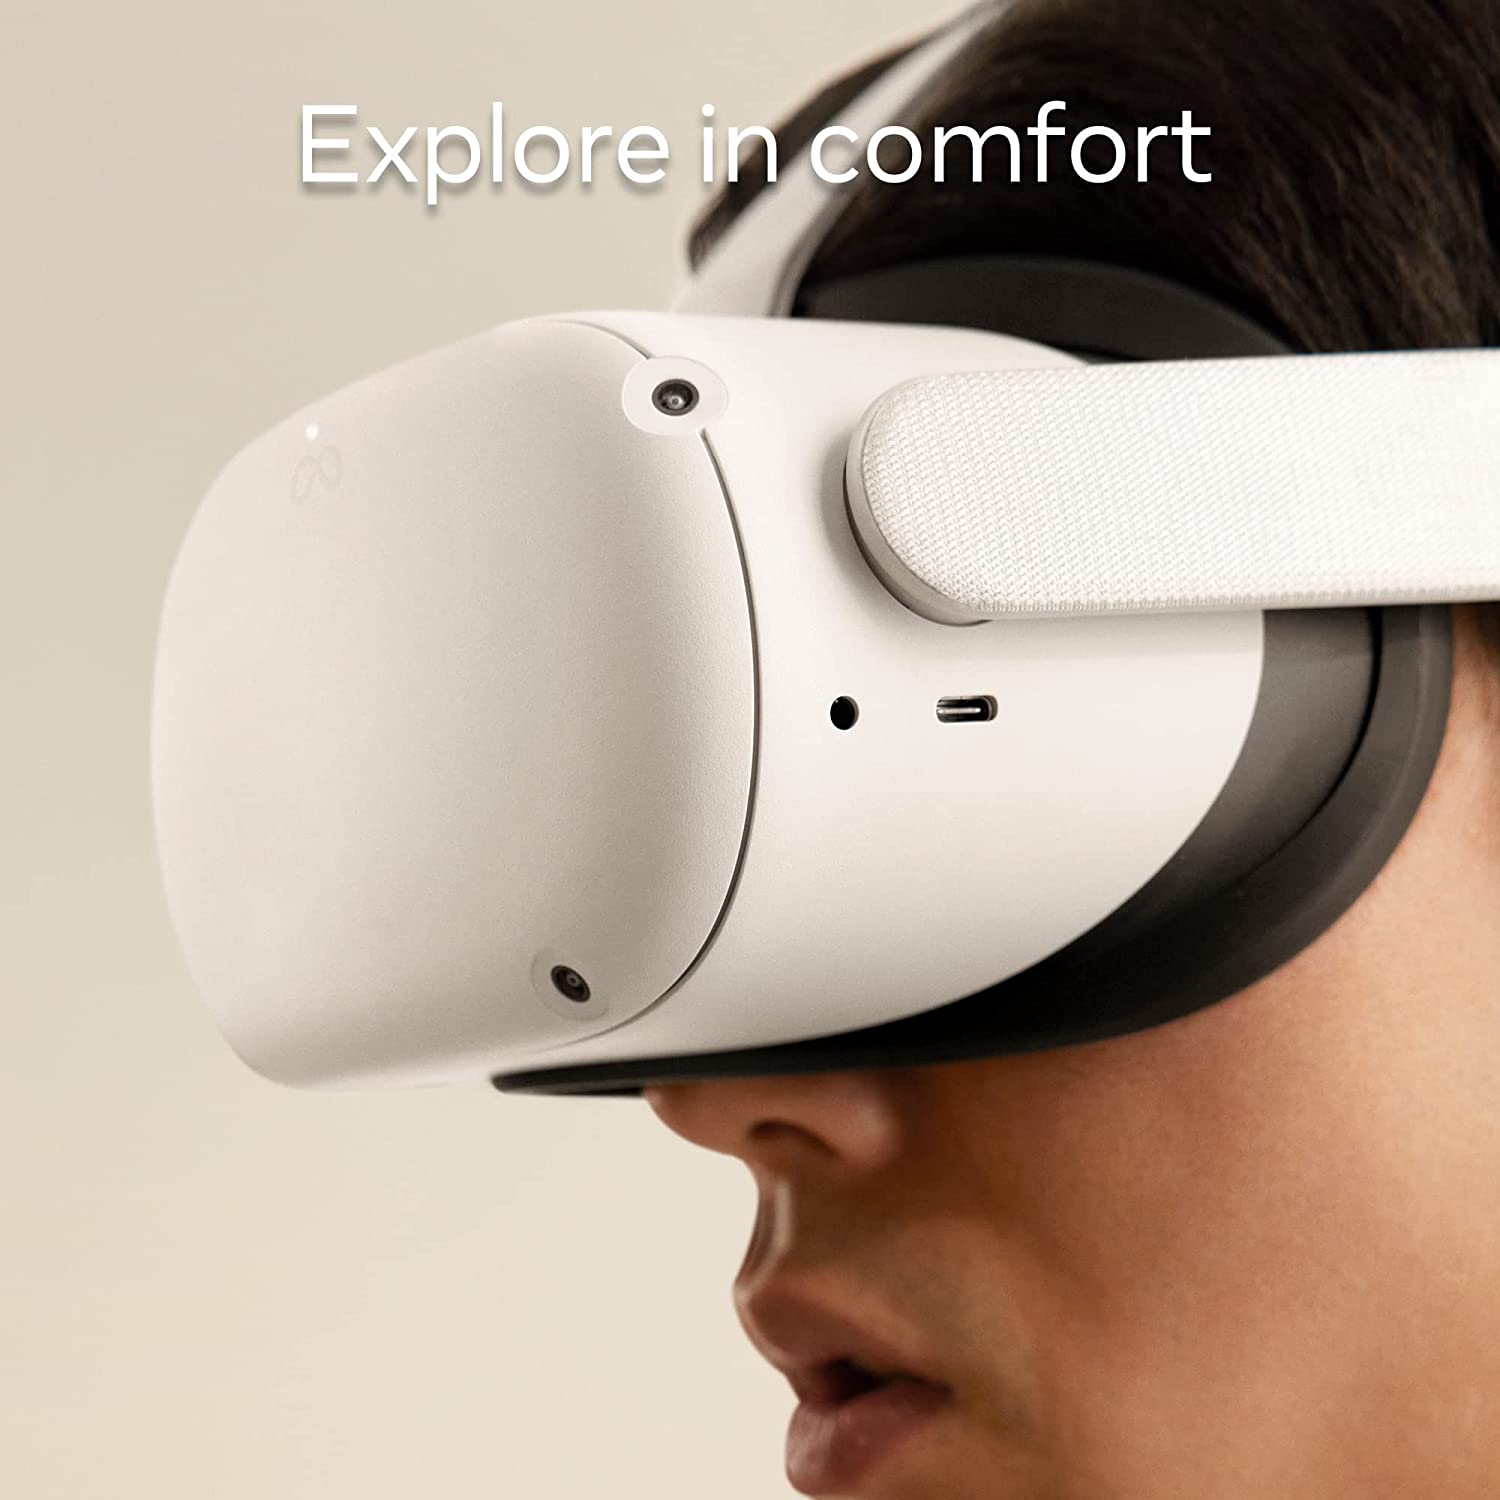 Meta Quest 2 Virtual Reality Headset 128 GB | HalifaxTrails